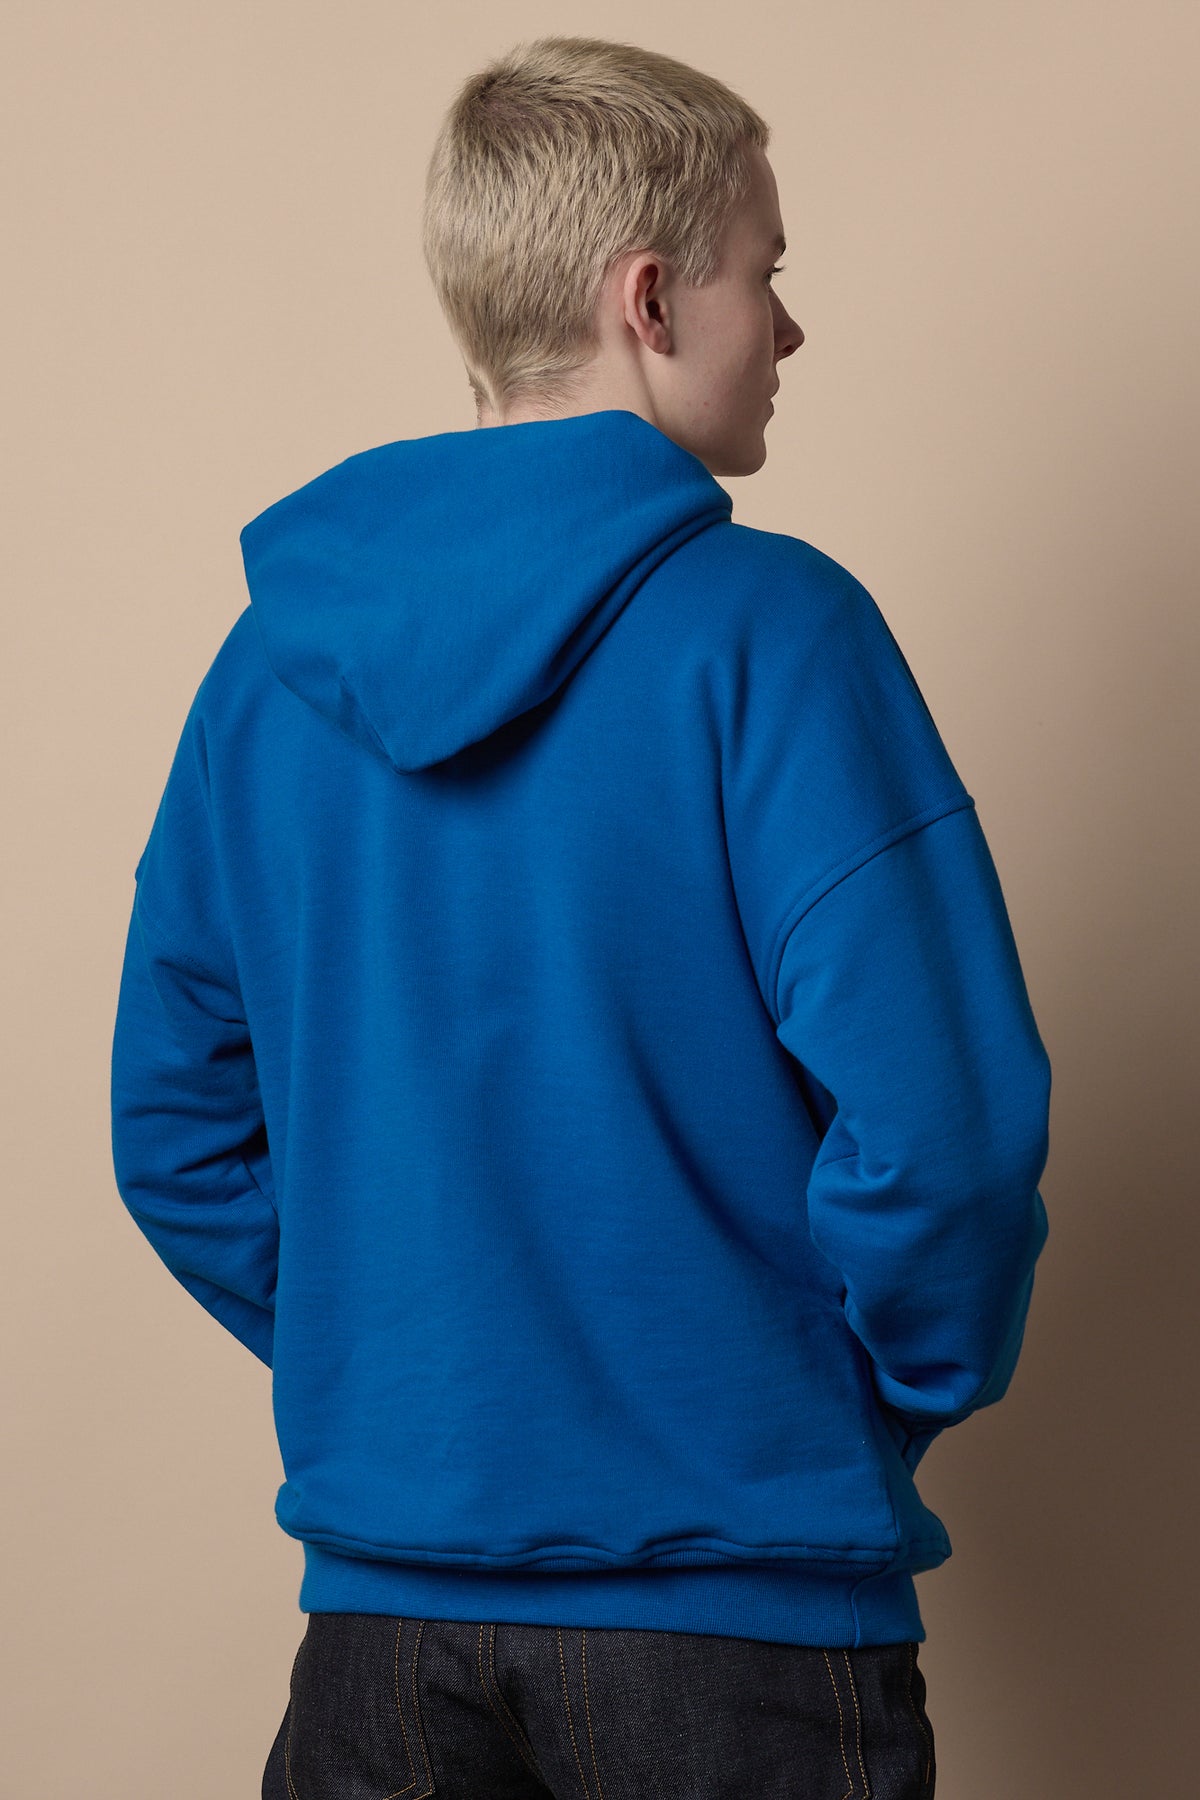 
            Back of white male wearing hooded sweatshirt in cobalt 